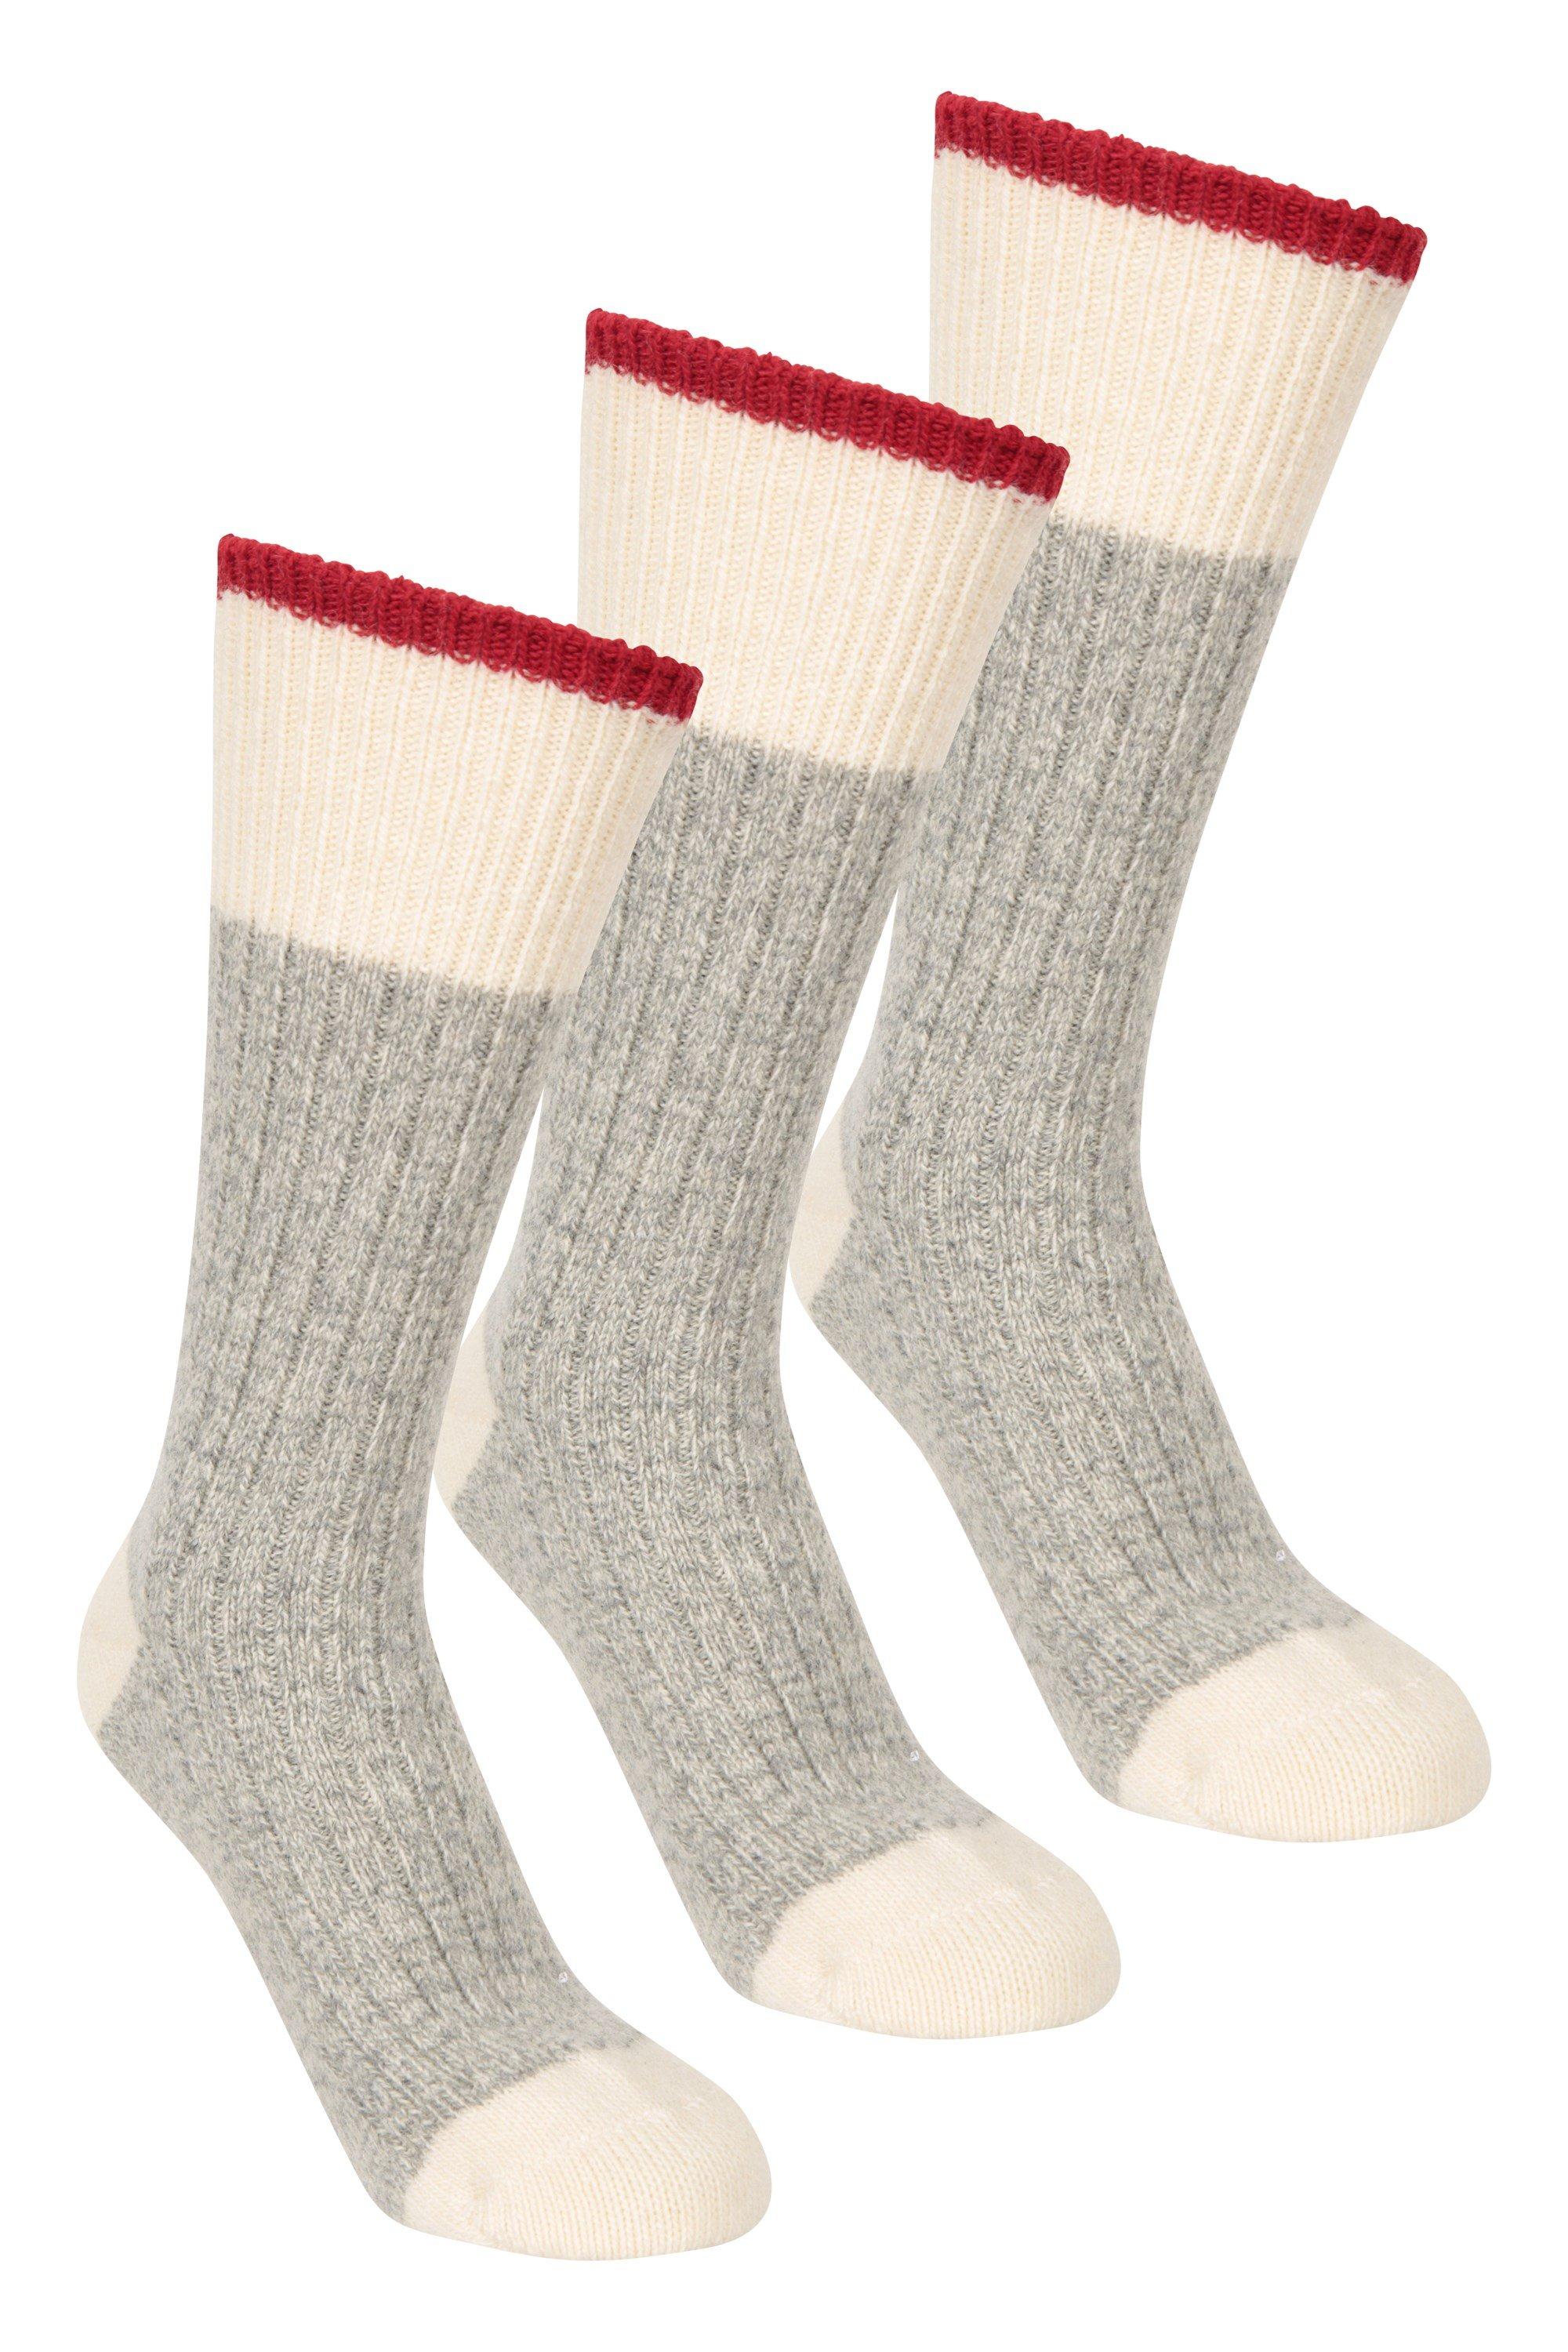 Isowool Chunky Socks 3 Pack  Wool Blend Mid Calf